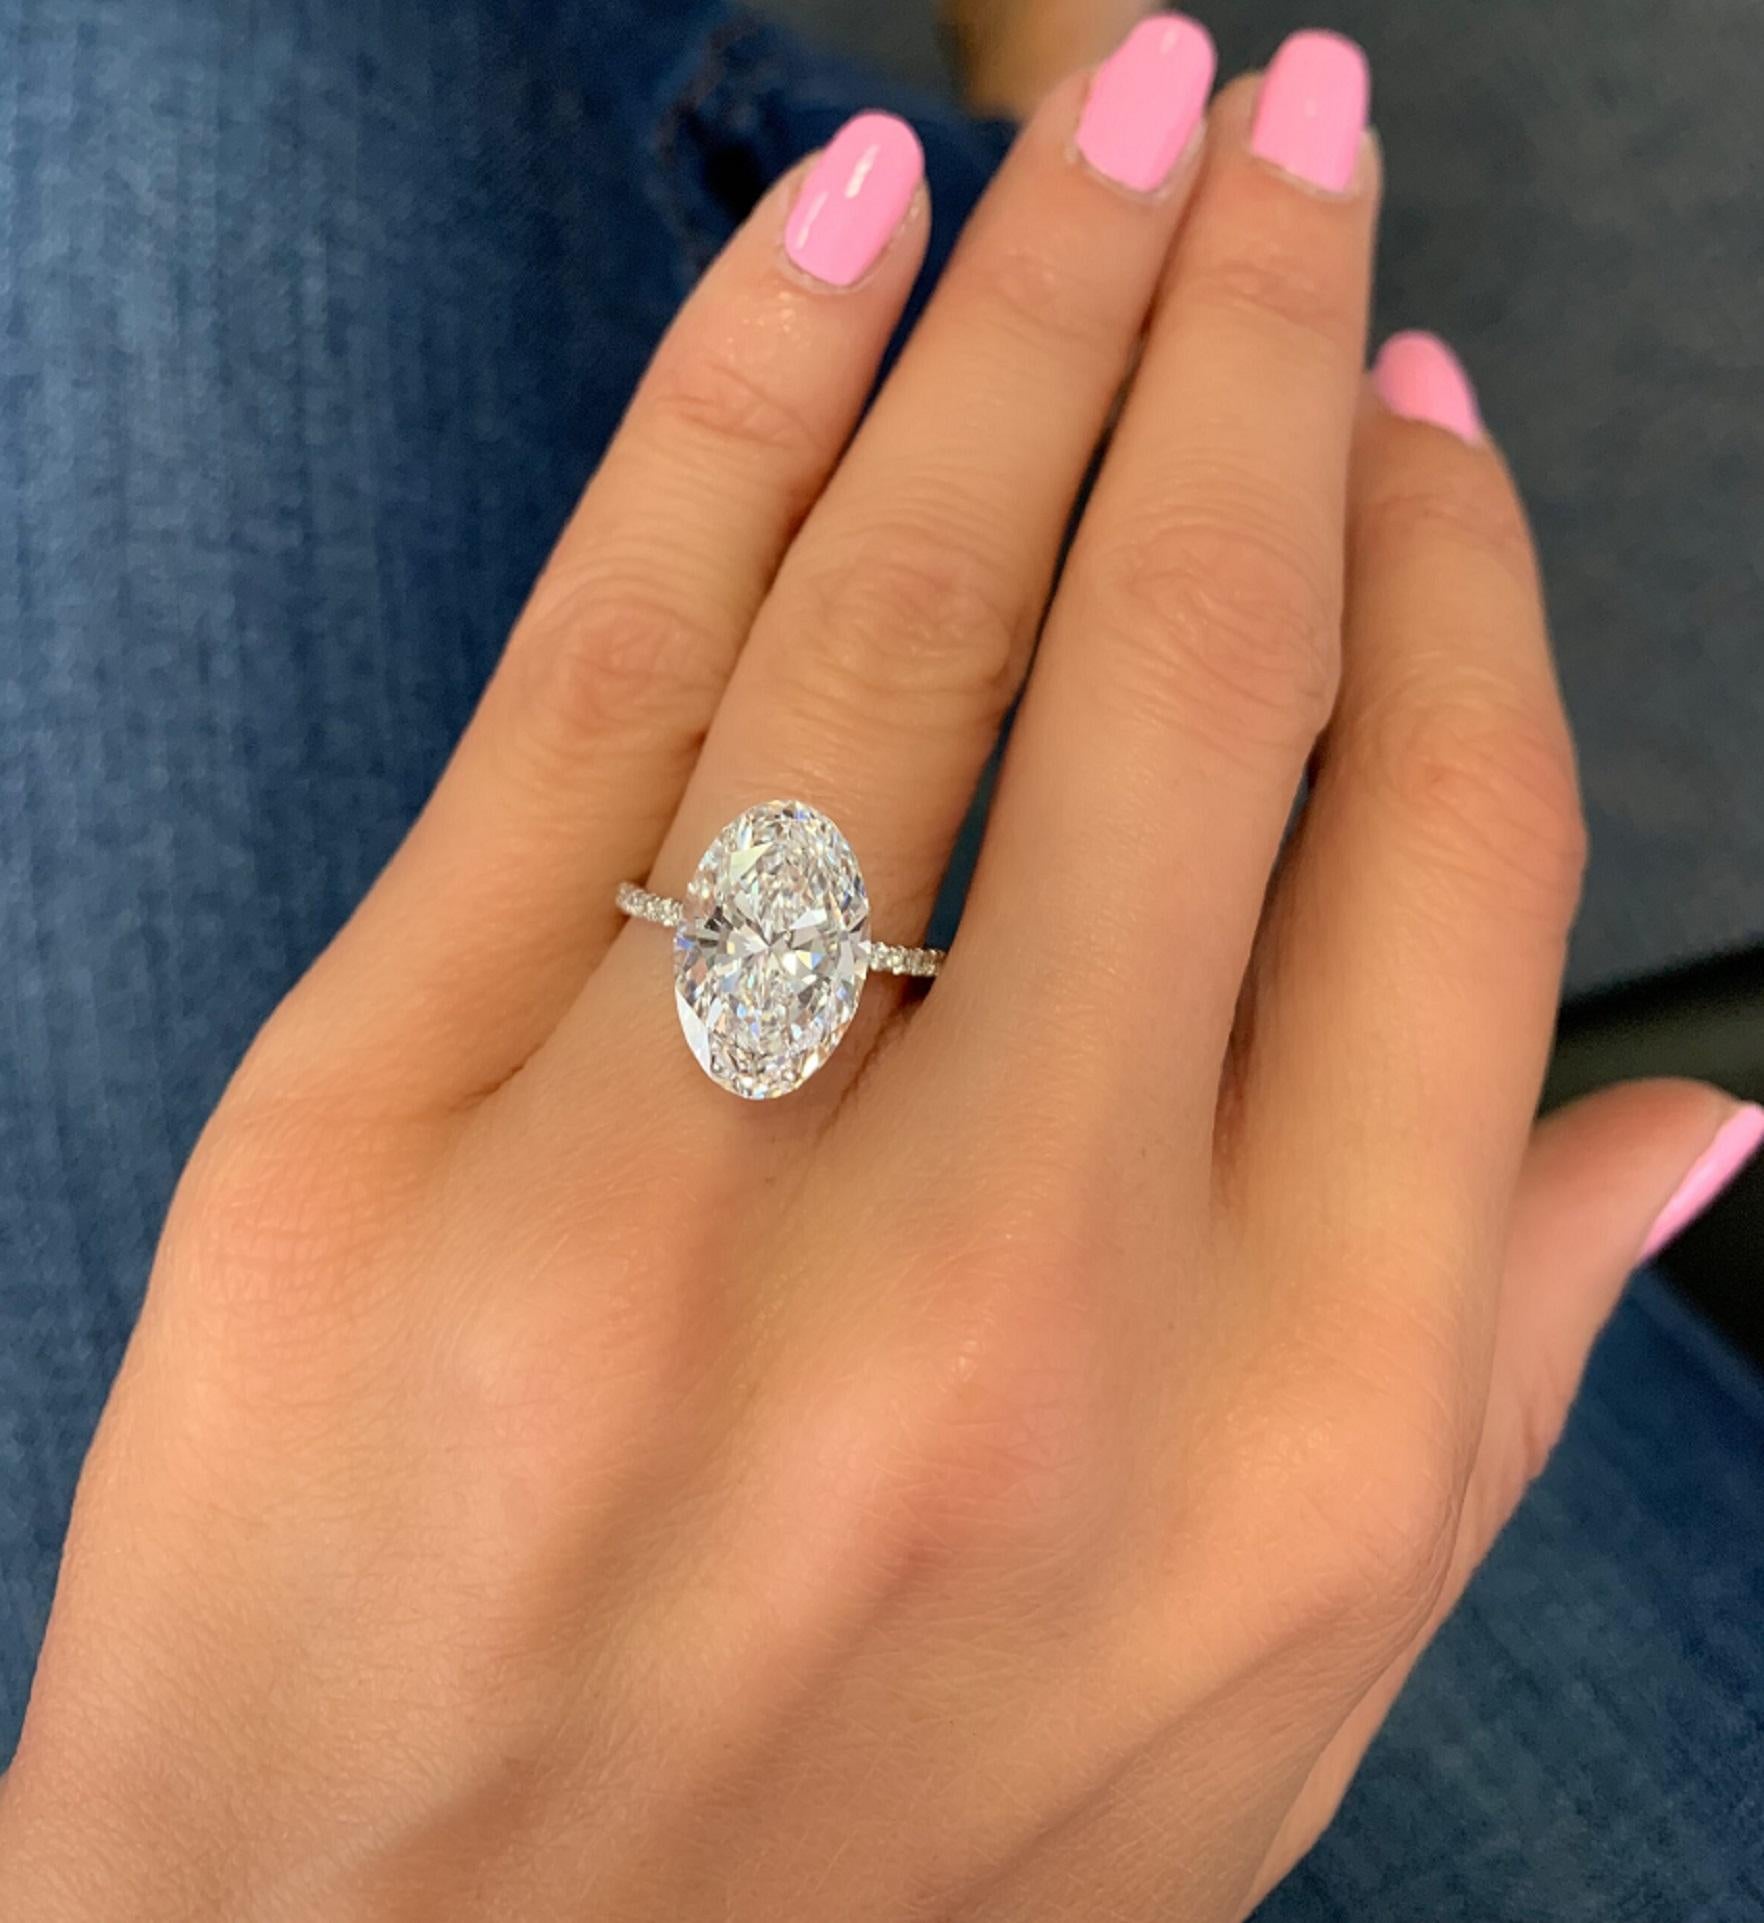 5 carat diamond rings for sale